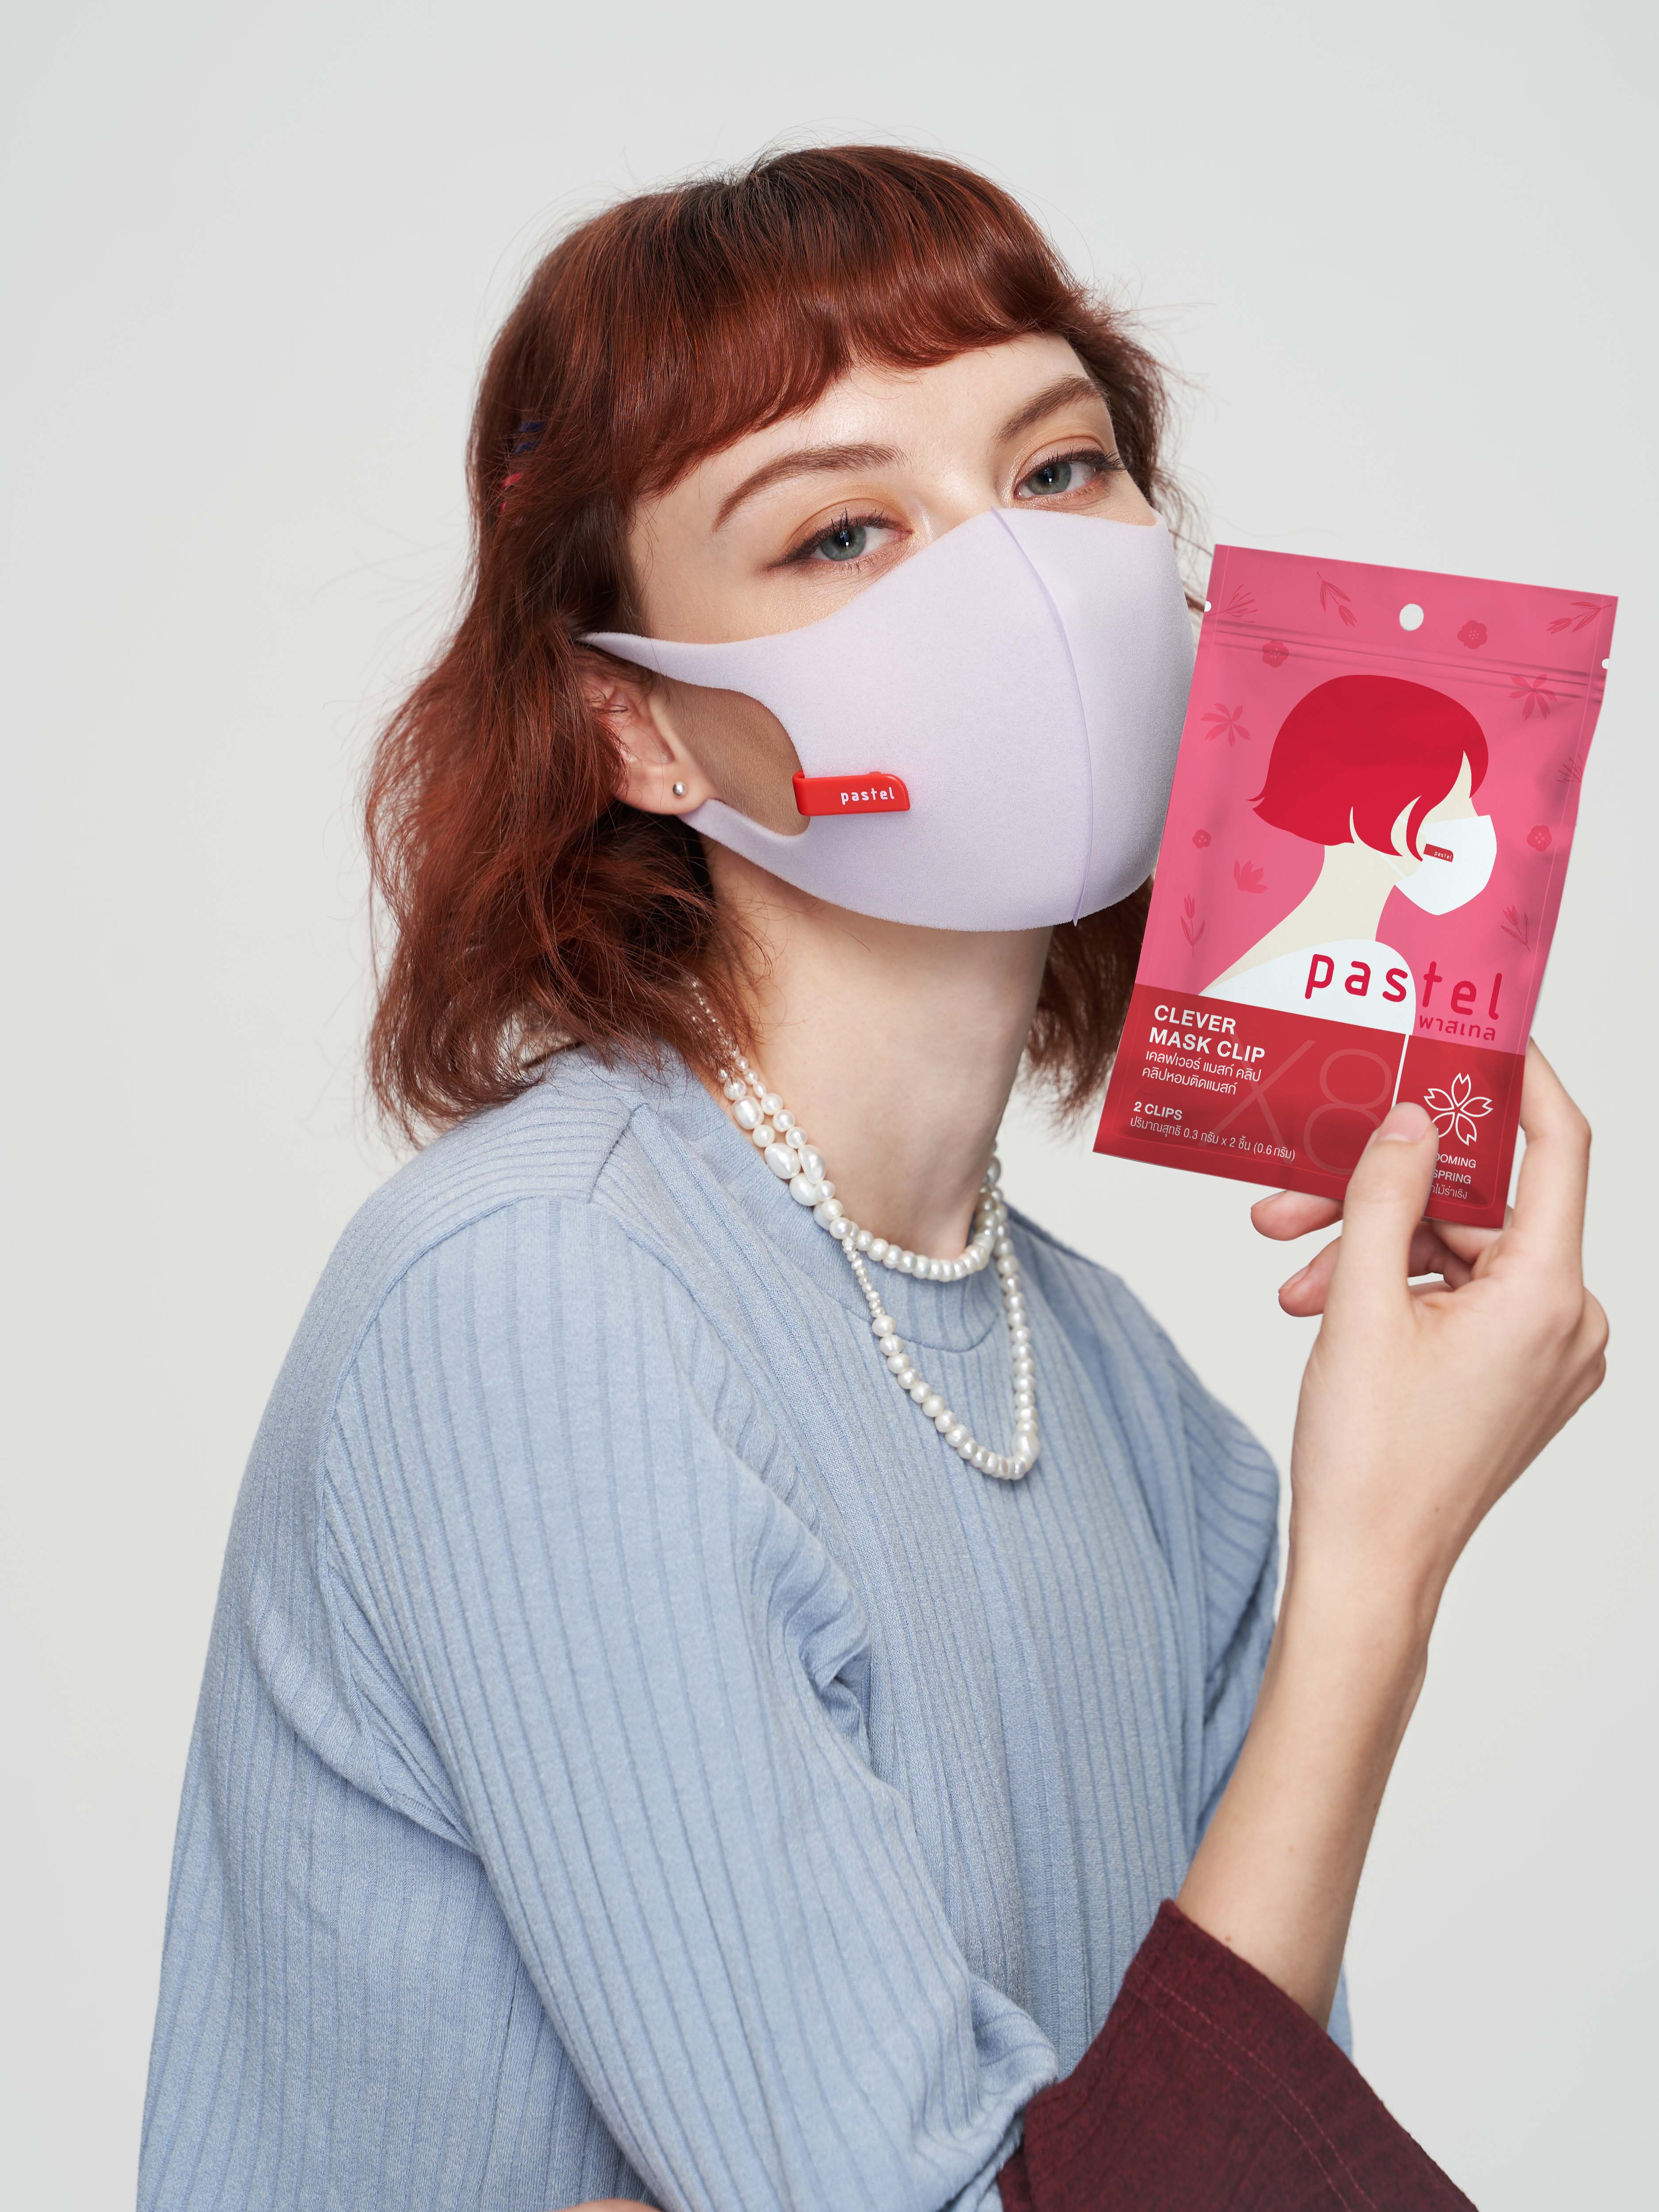 Pastel Clever Mask Clip – BLOOMING IN SPRING คลิปหอมติดแมสก์ กลิ่นดอกไม้ร่าเริง